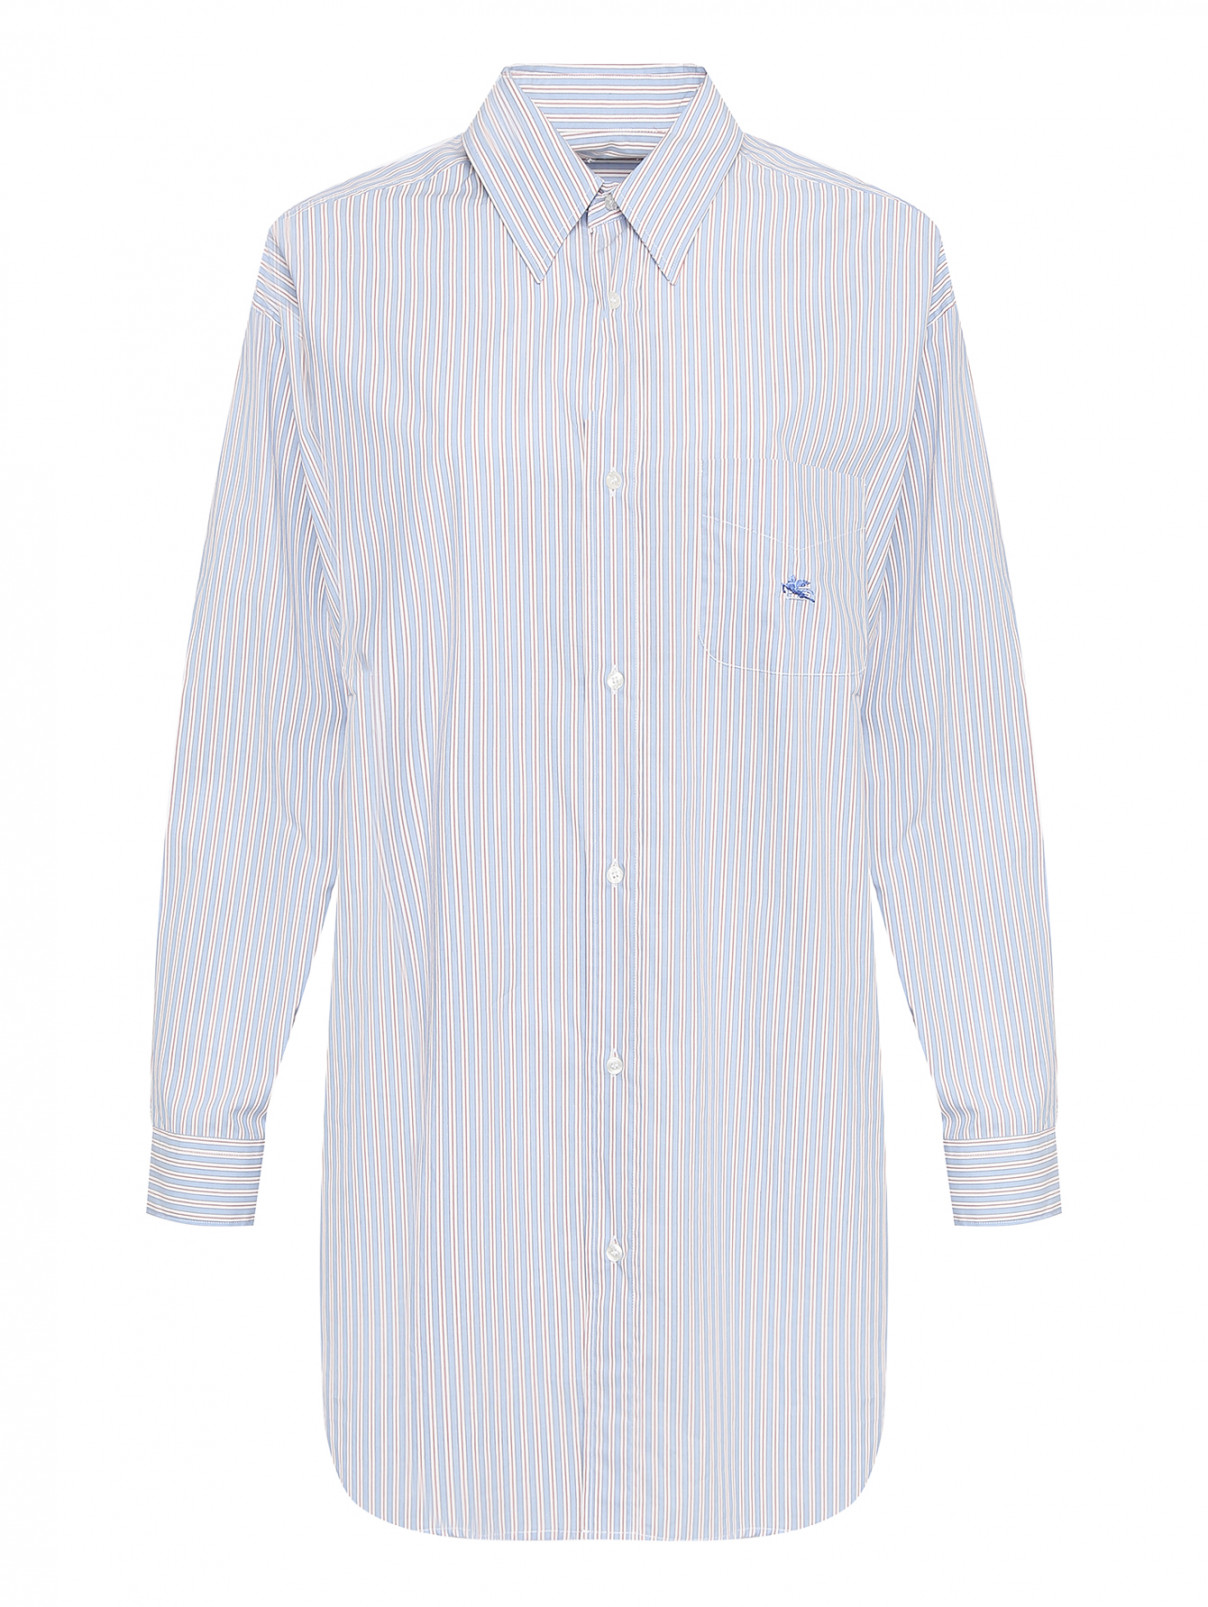 Рубашка с узором полоска Etro  –  Общий вид  – Цвет:  Синий